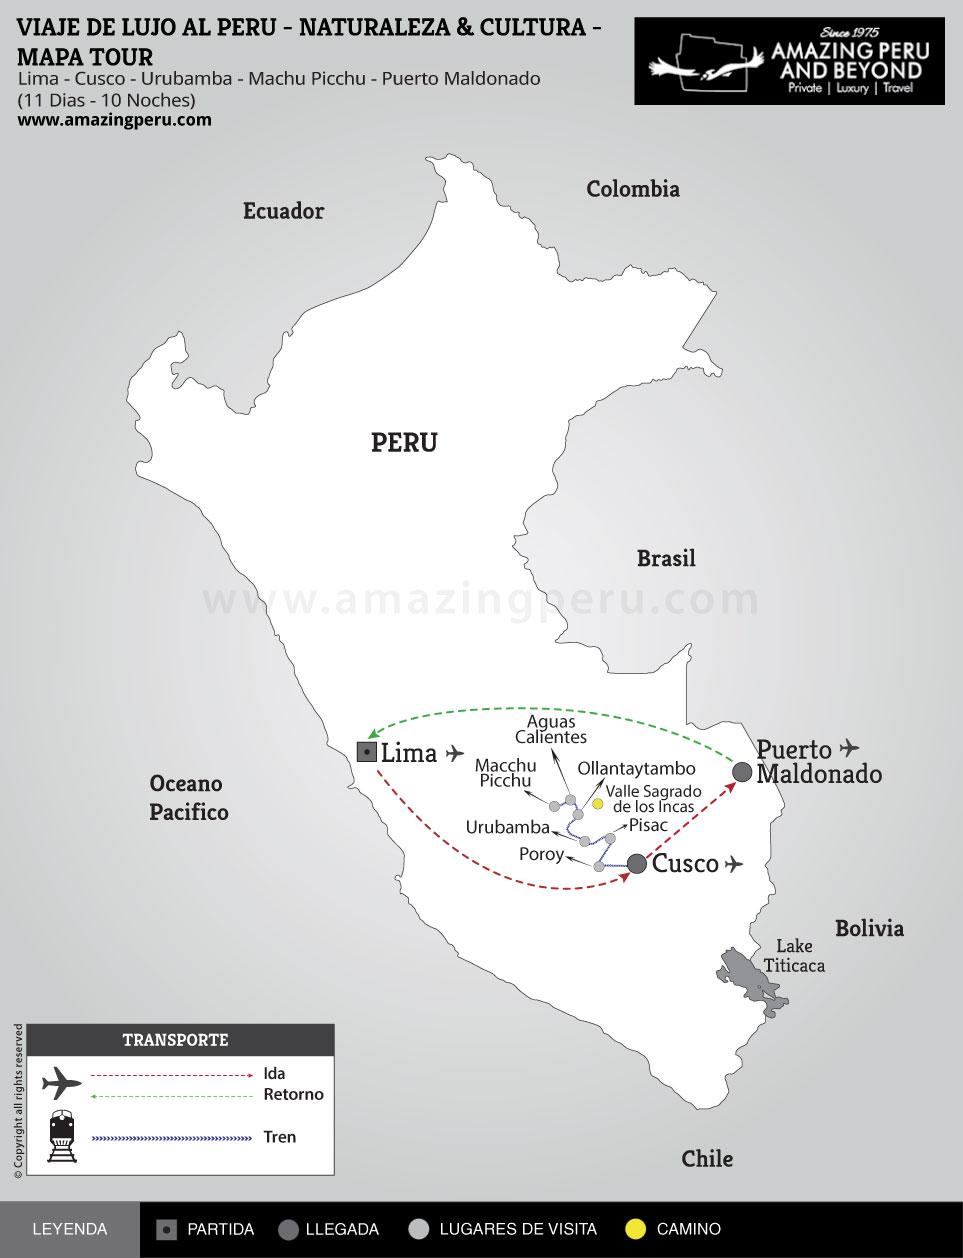 Viaje de Lujo Al Peru - Naturaleza & Cultura